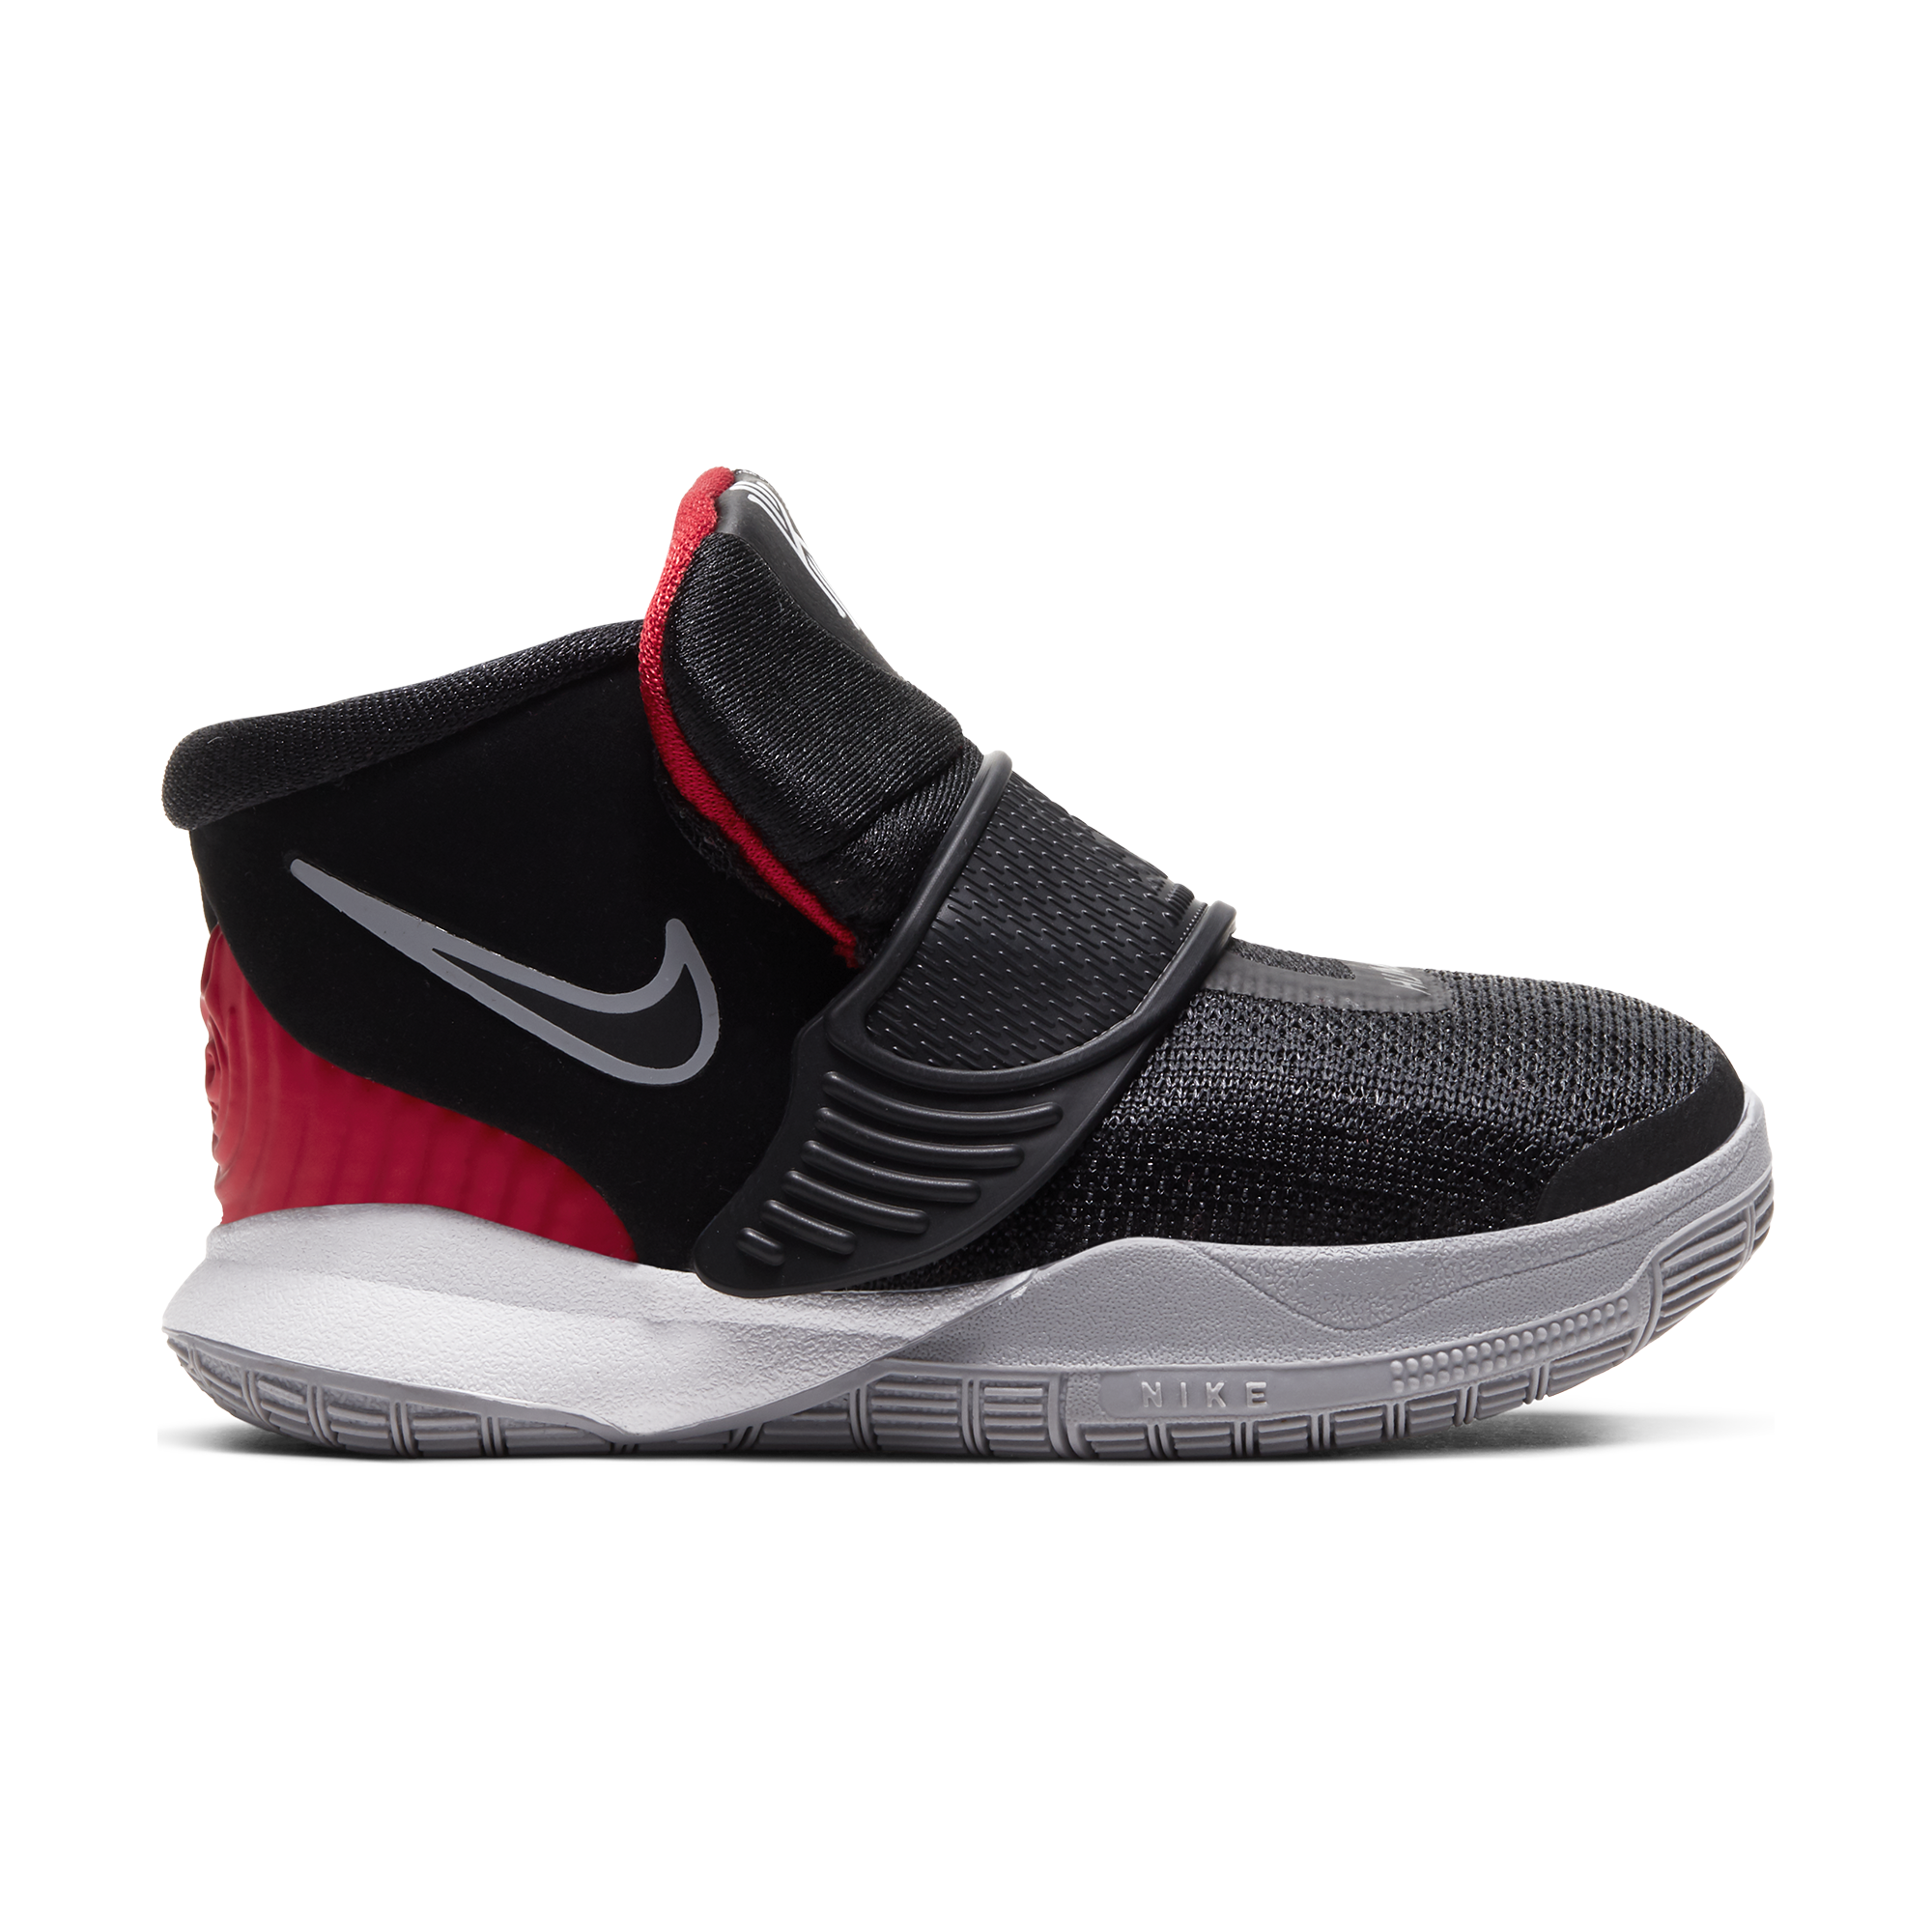 Nike Kyrie 6 Jet Black Mens Shoes Size 10.5 Bq4630 eBay